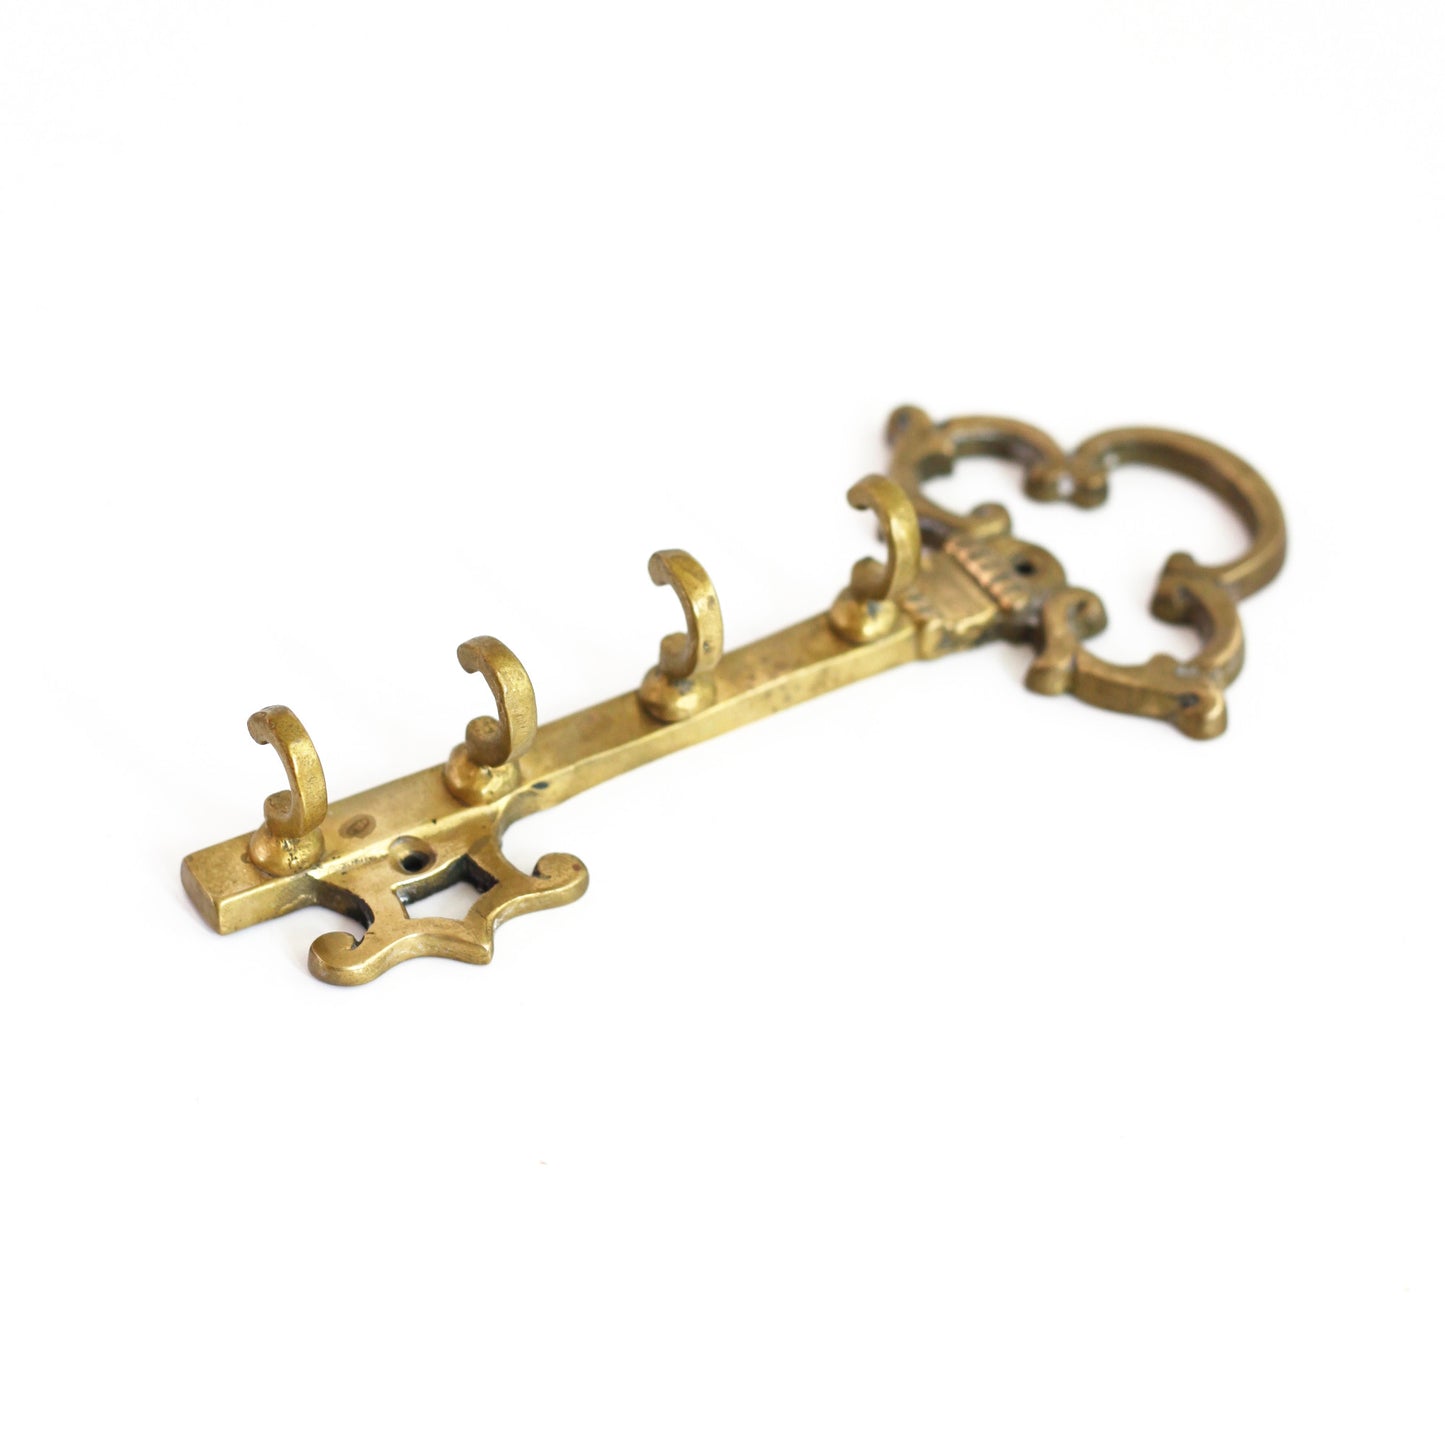 SOLD - Vintage Brass Skeleton Key Wall Hooks